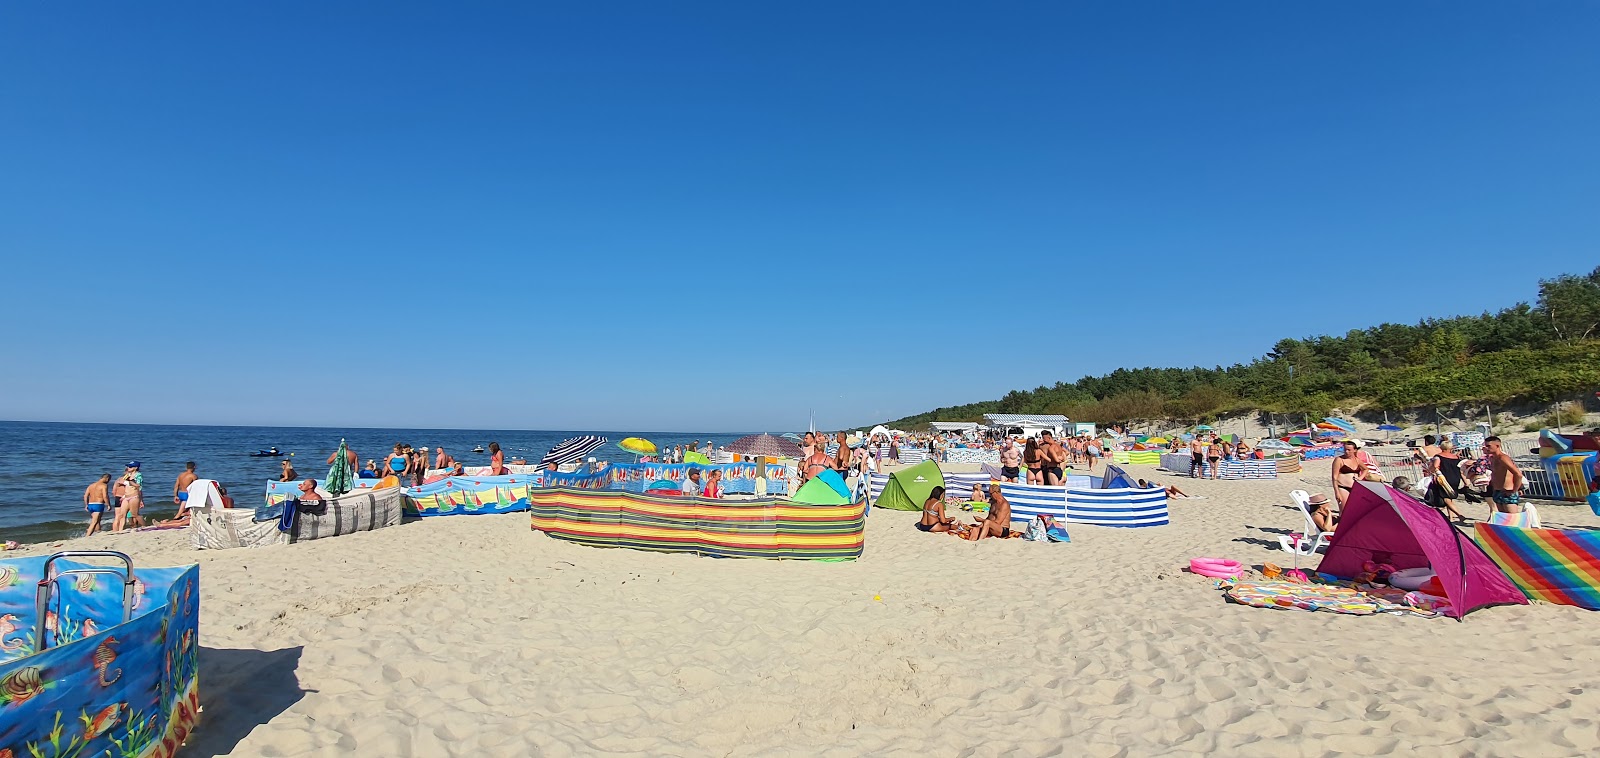 Foto van Krynica Morska beach met recht en lang